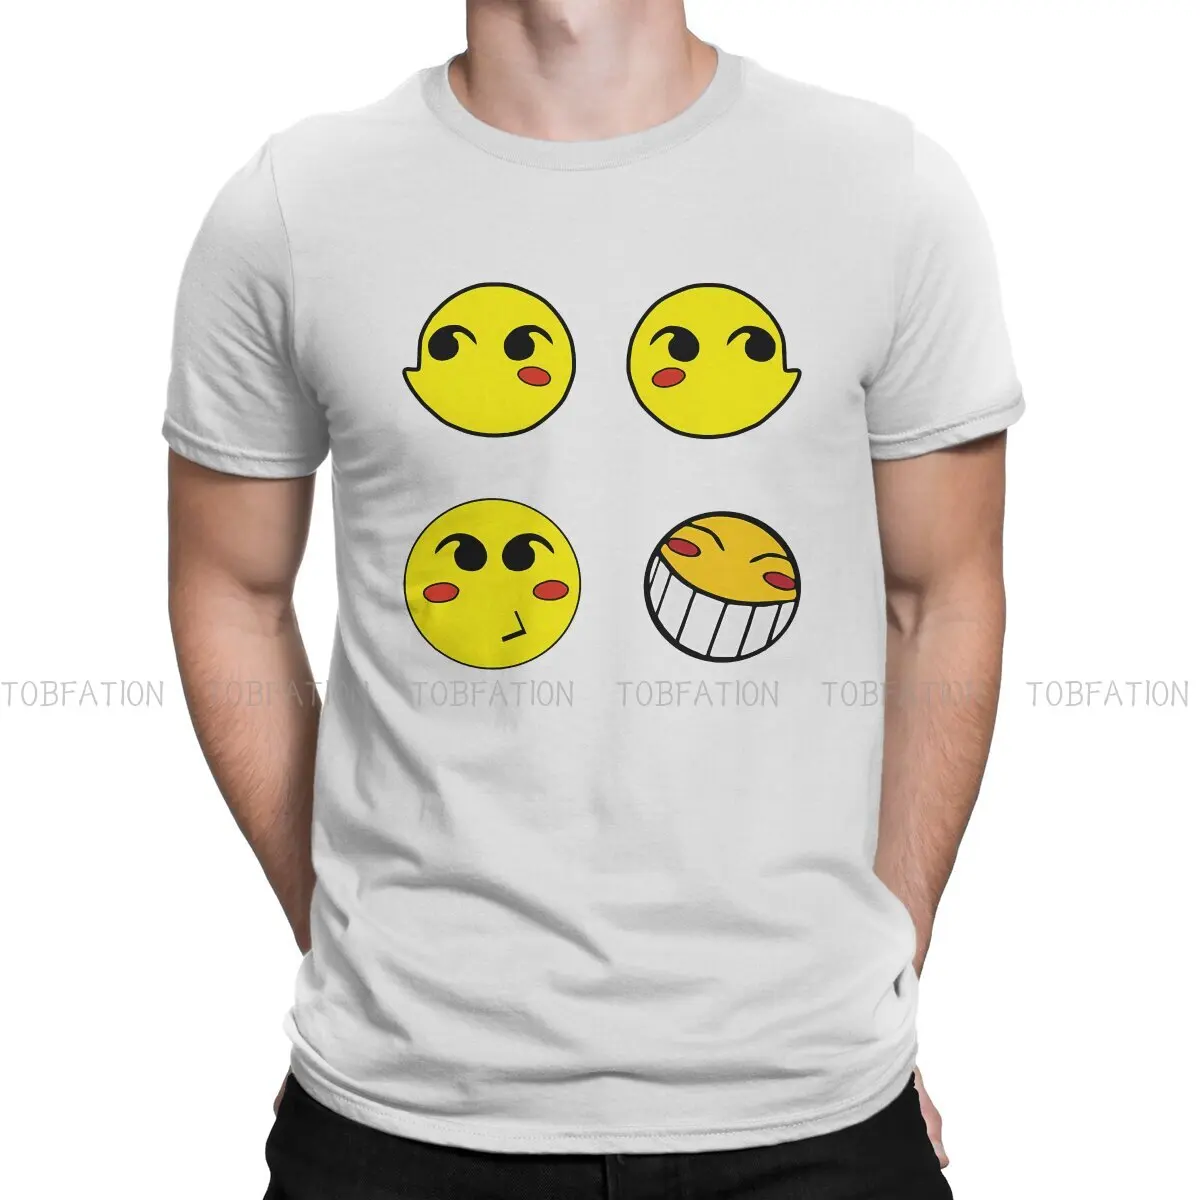 

Cowboy Bebop Anime Original TShirts Ed Smile Distinctive Men's T Shirt Hipster Clothing Size S-6XL